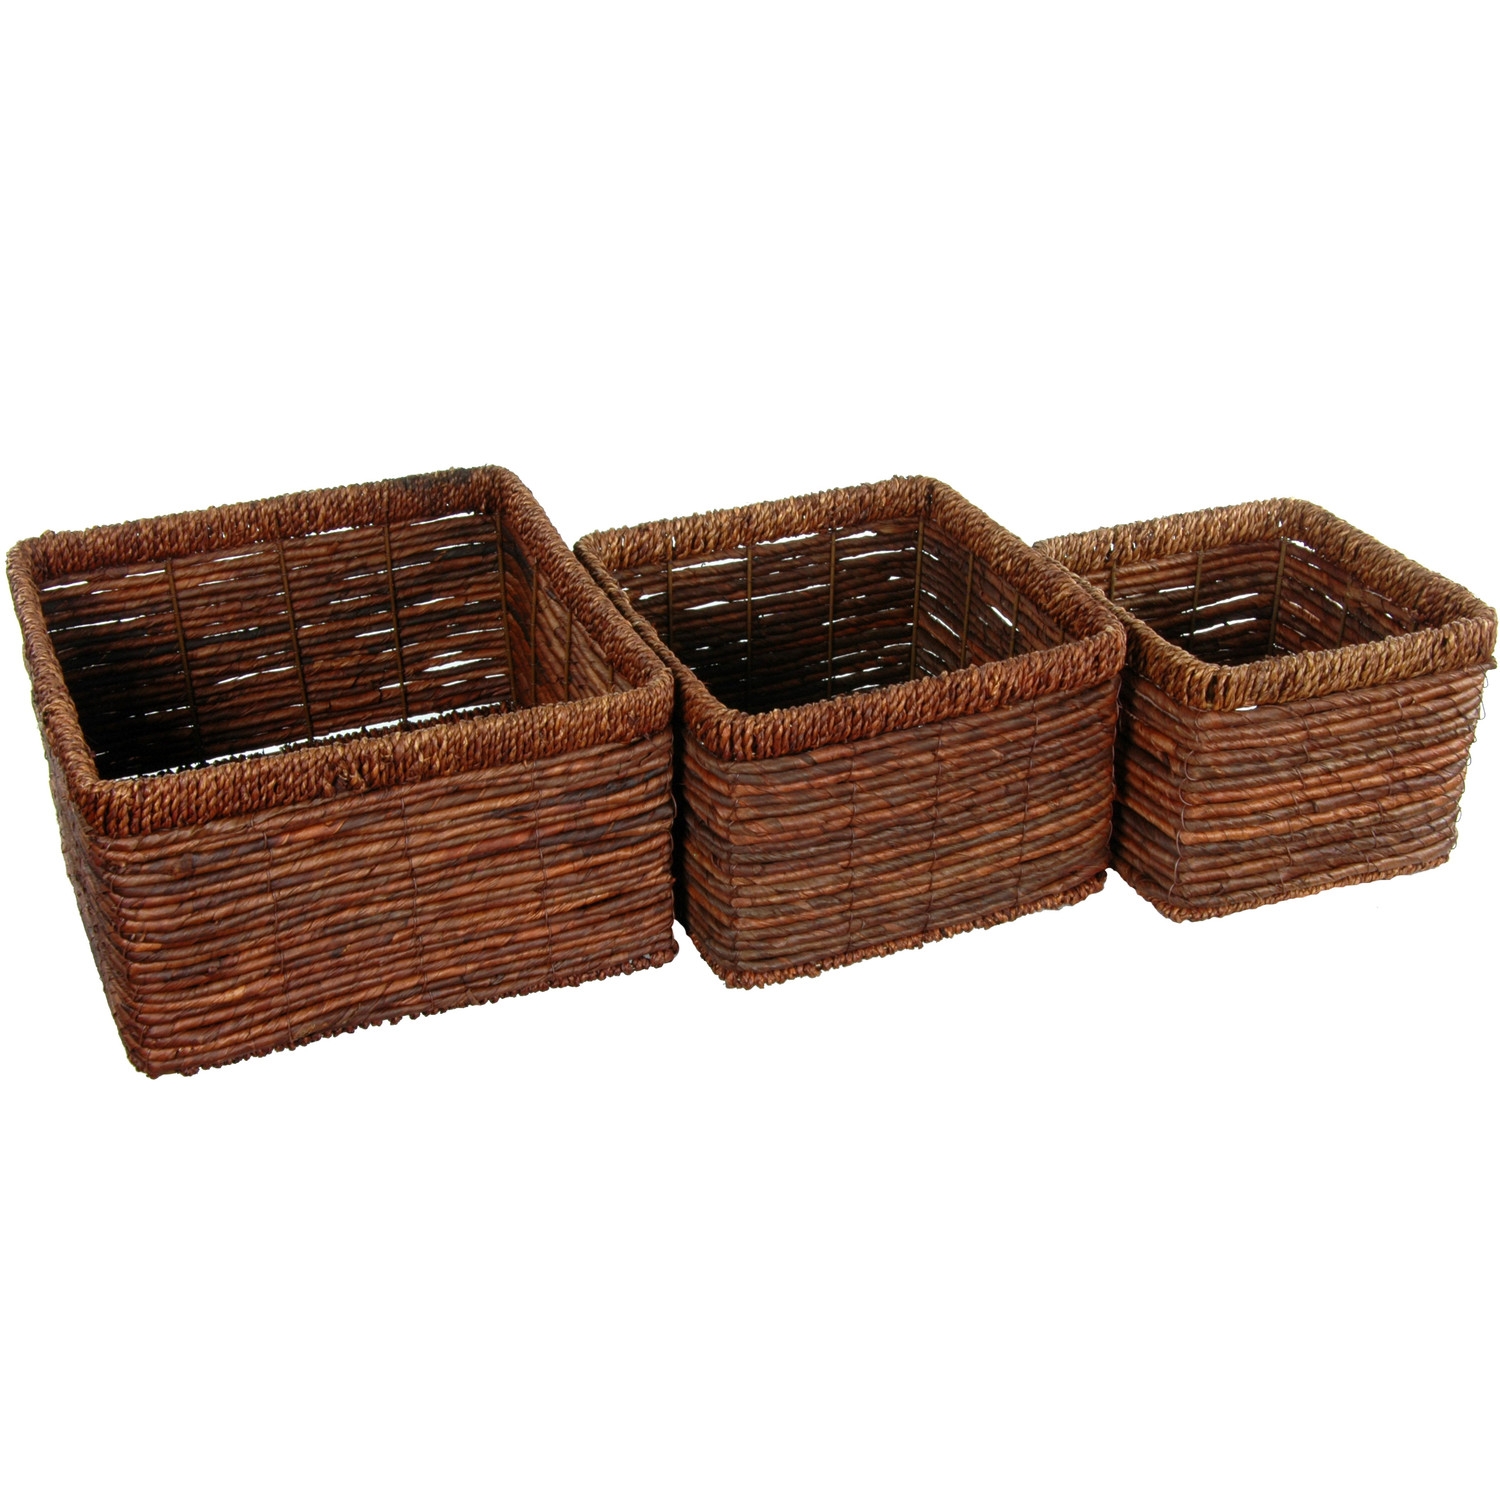 Hand Woven High Basket Tray (Set of 3) - Image 0